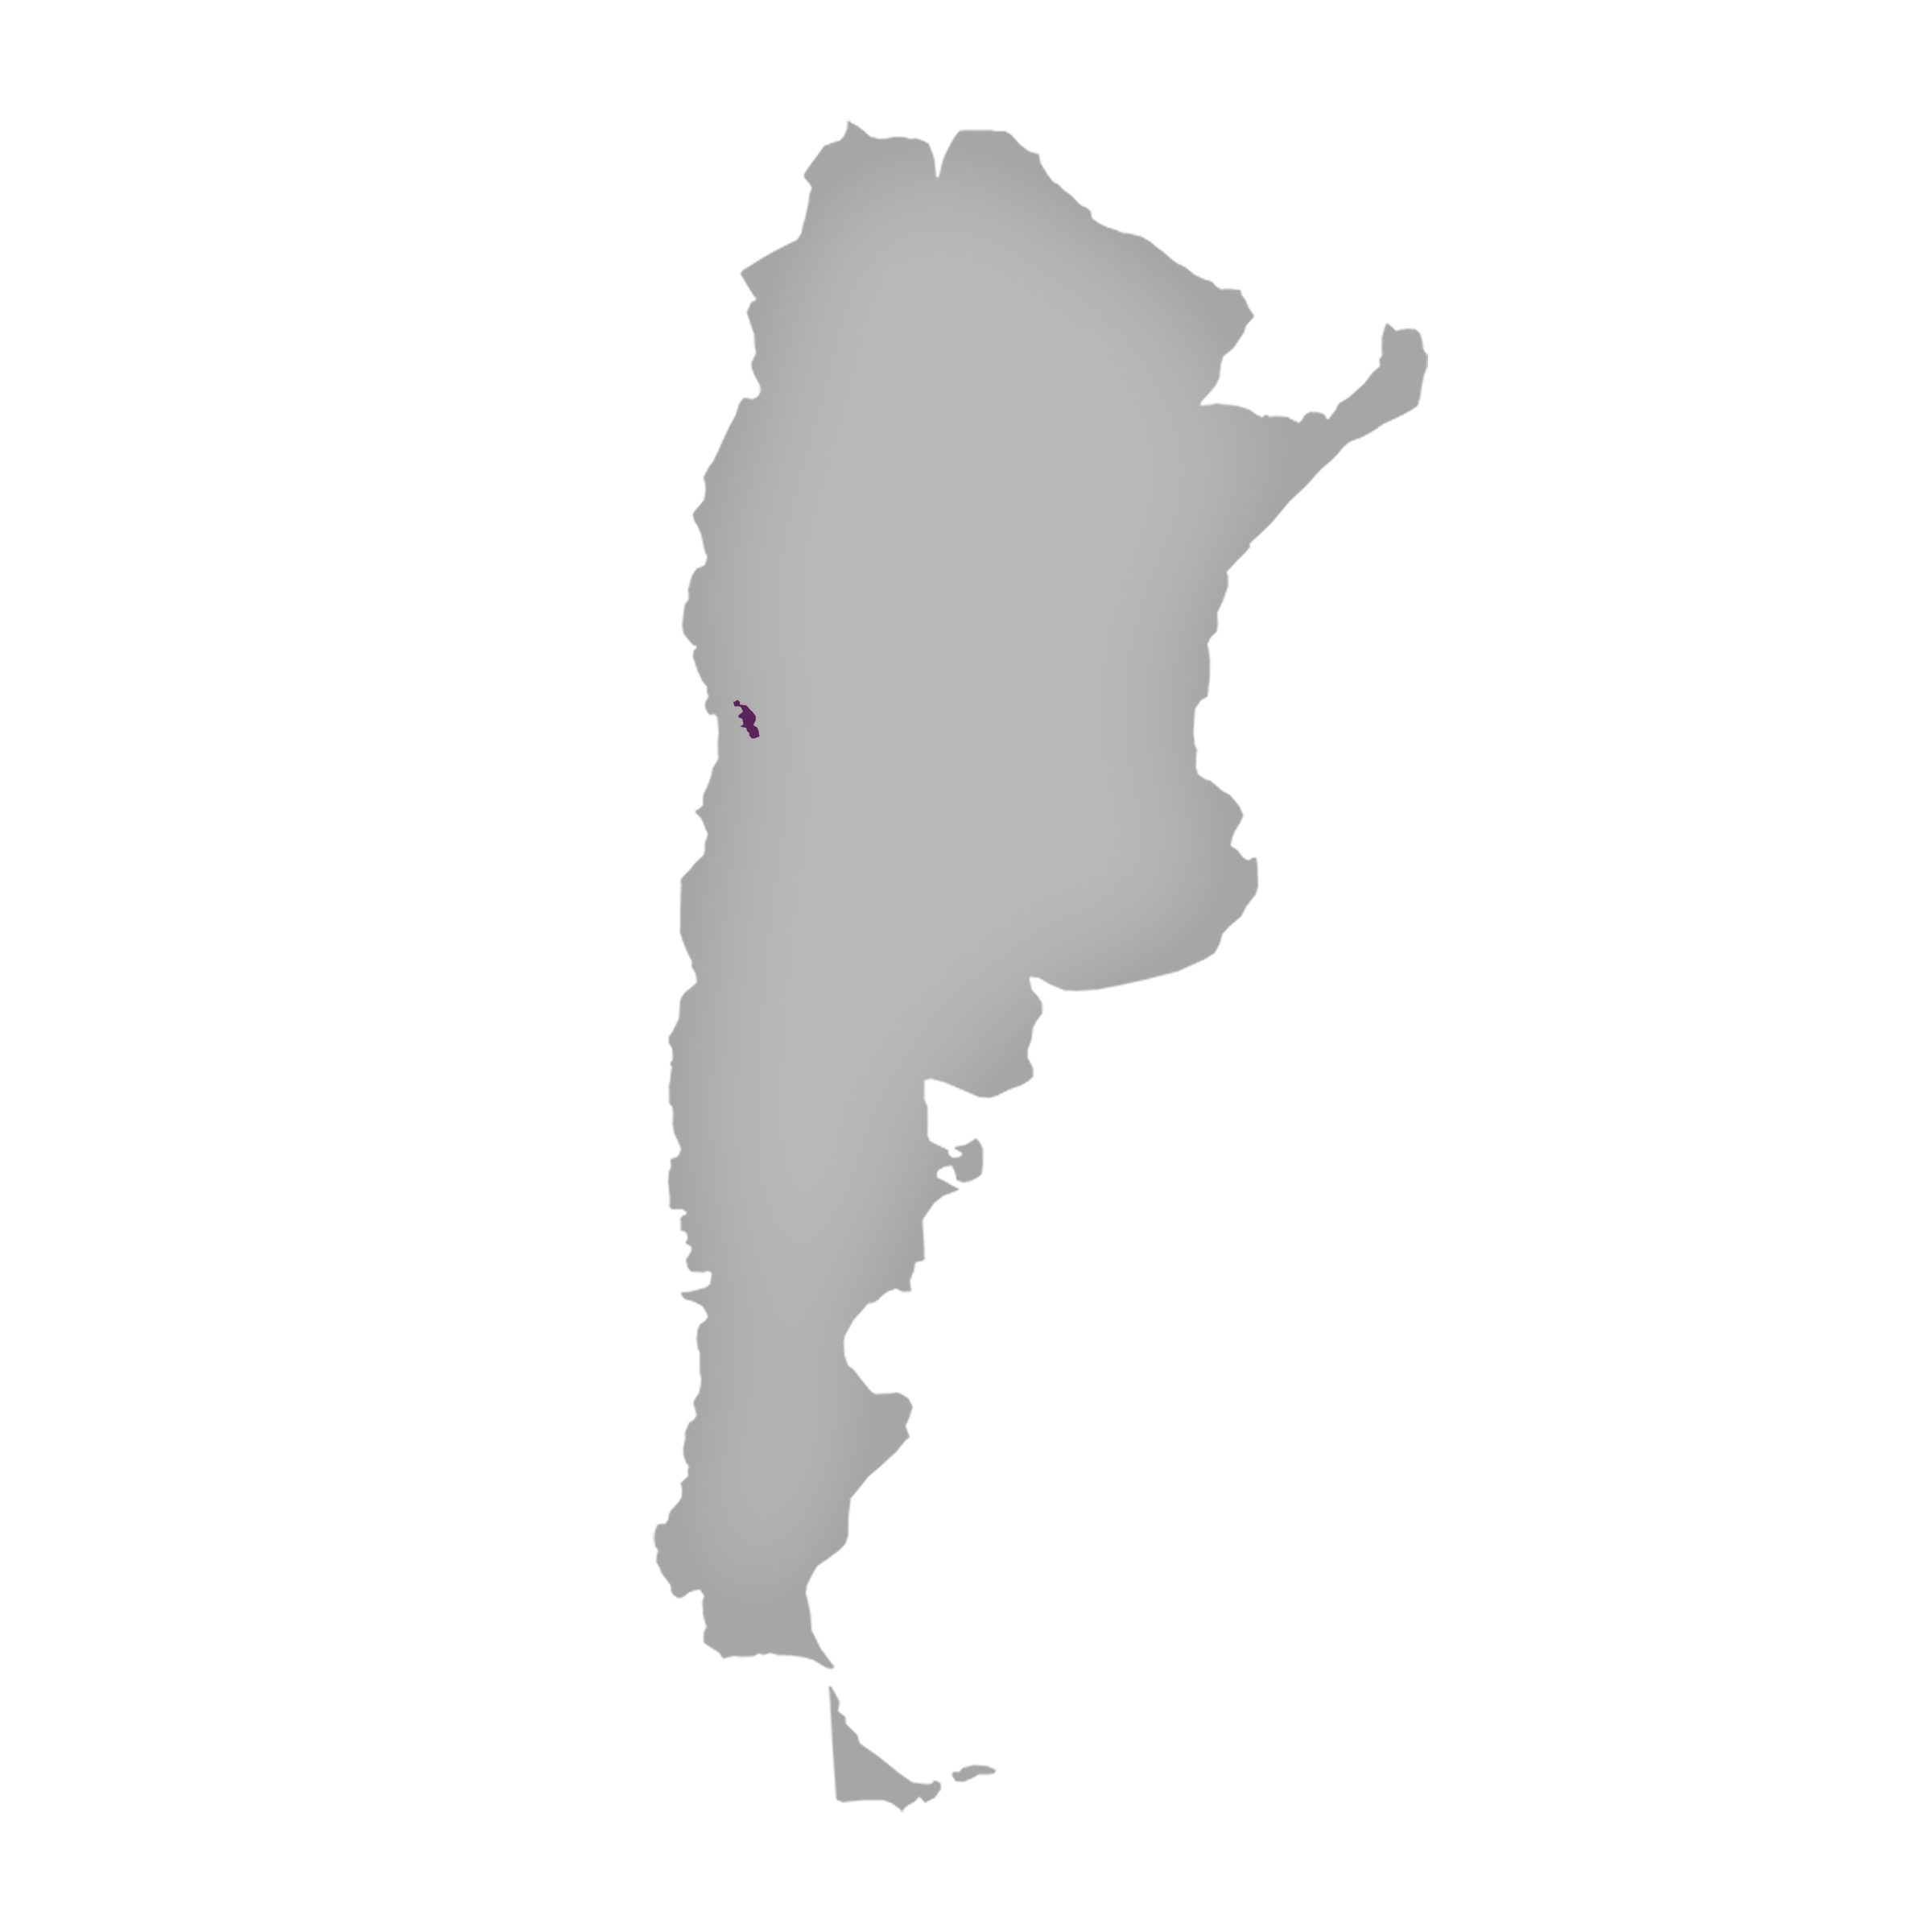 Region: Uco Valley